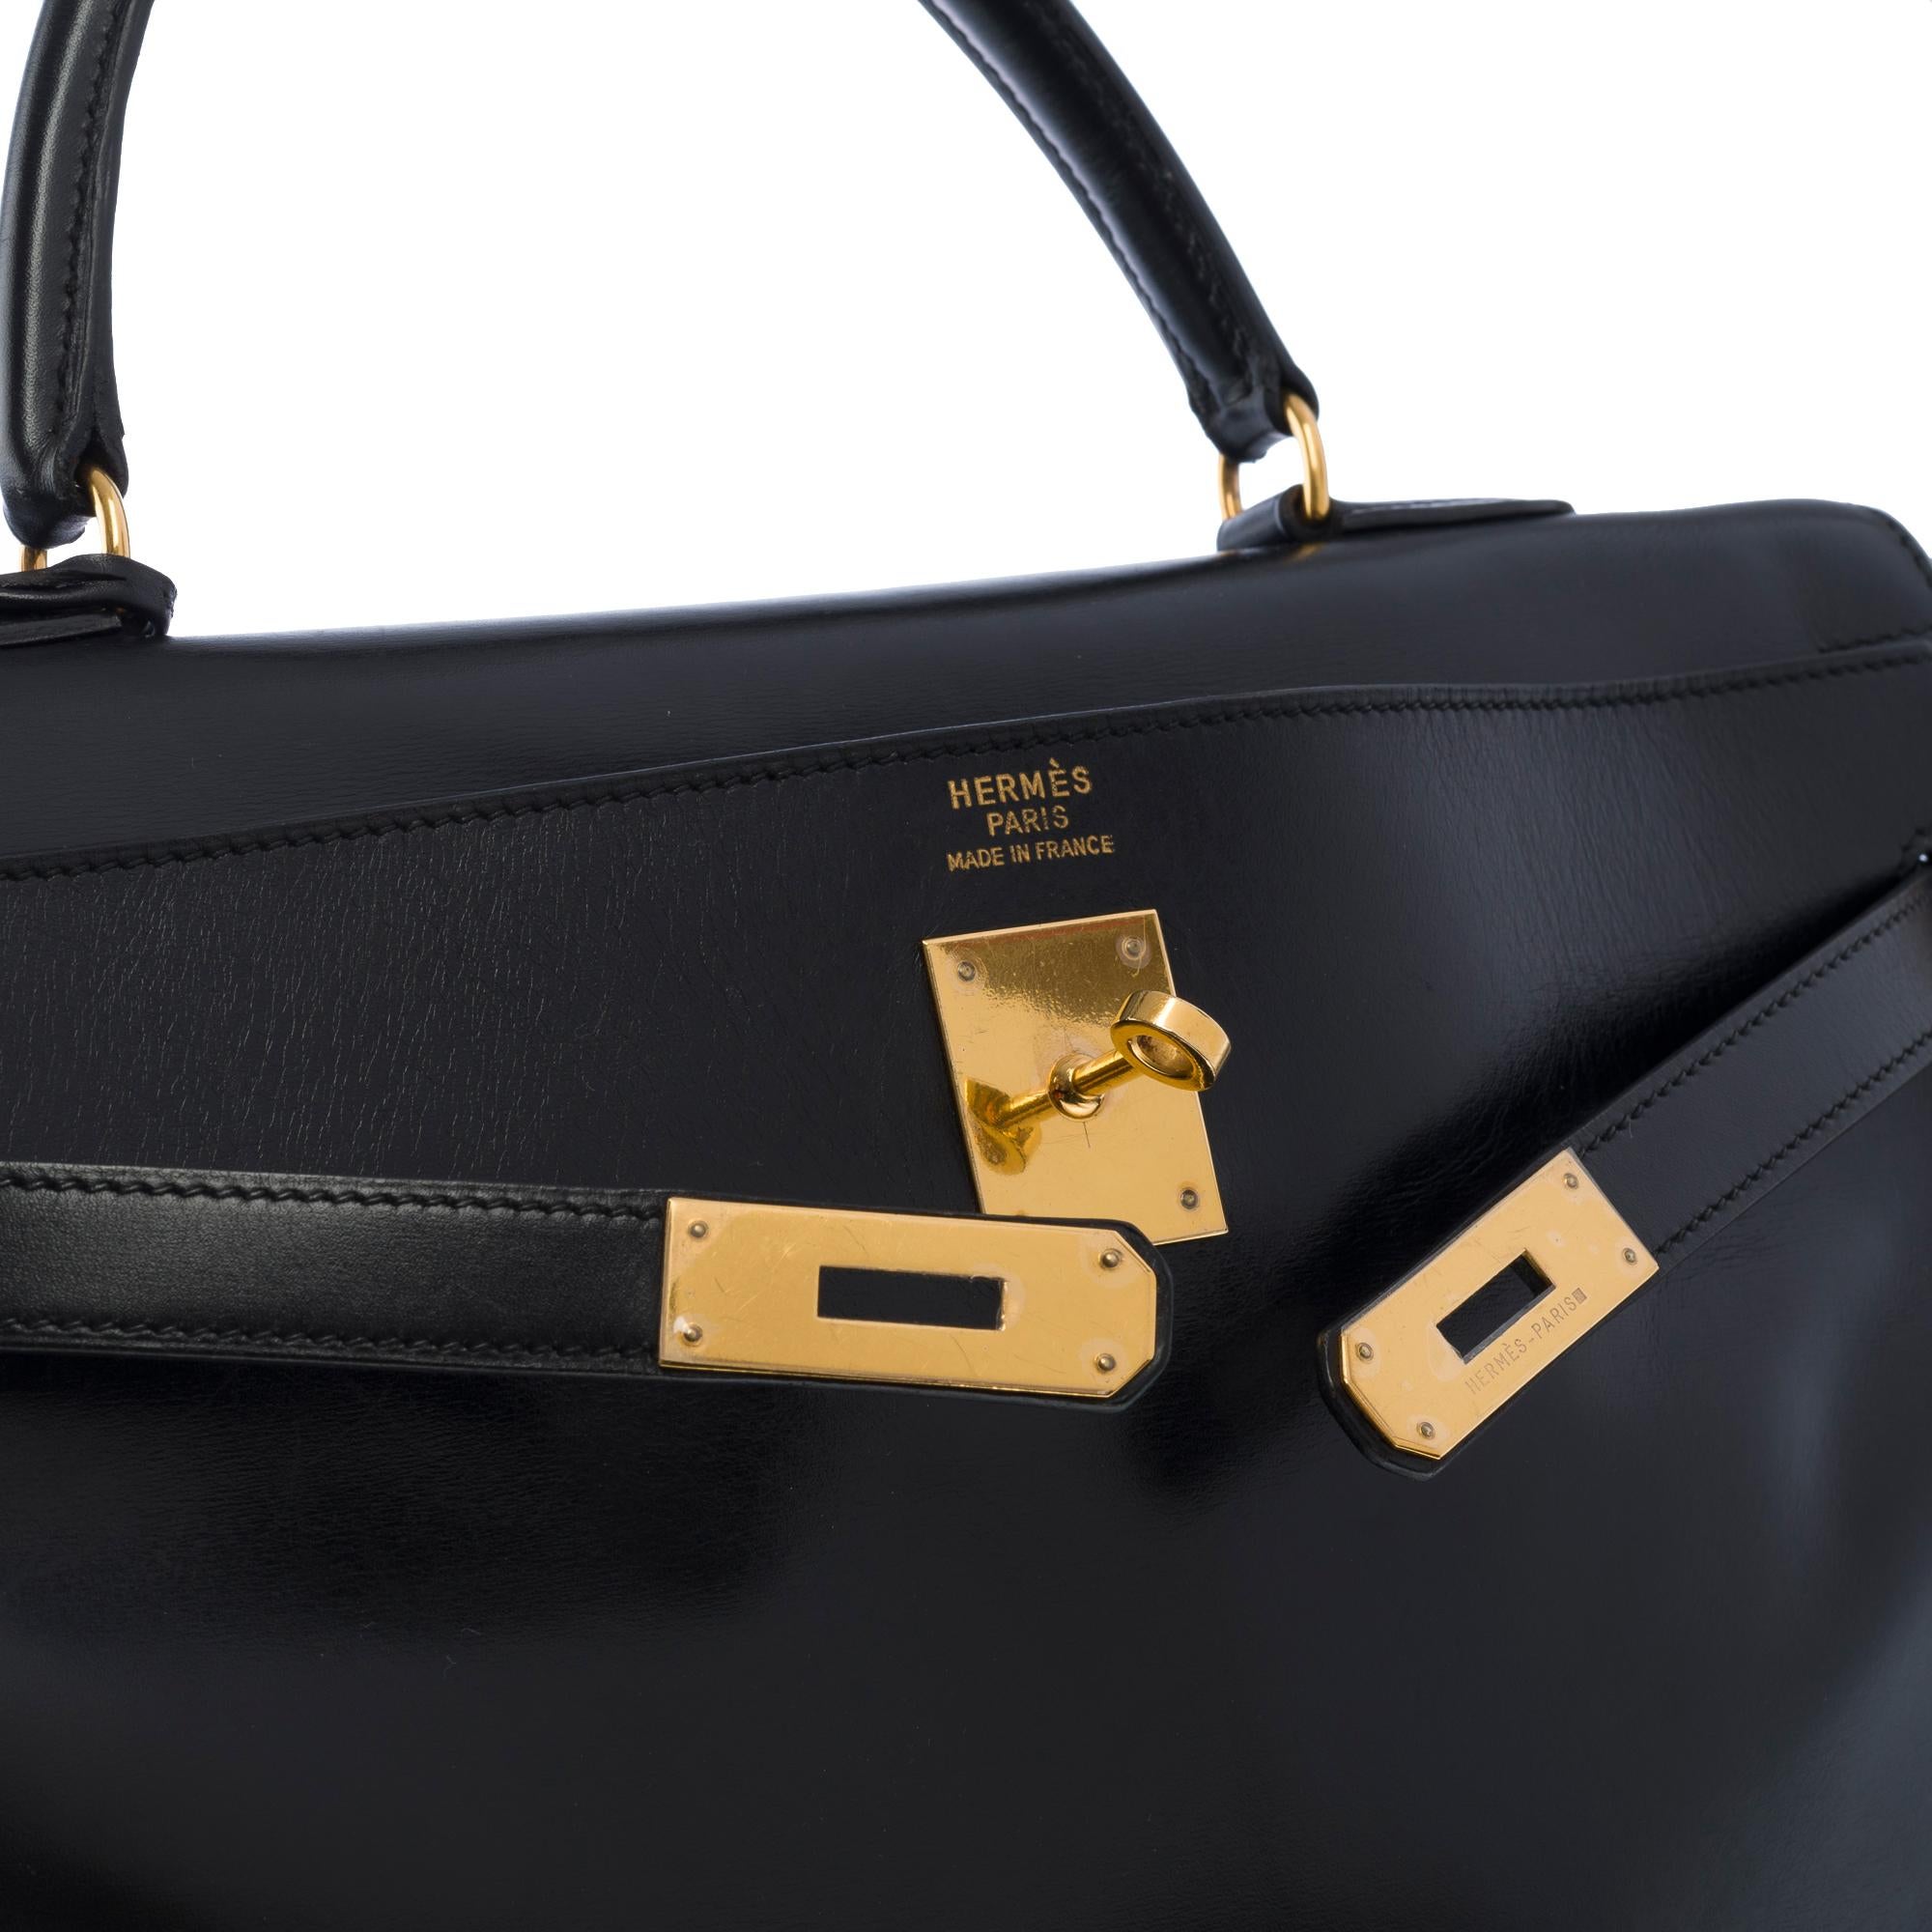 Hermès Kelly 35 retourne handbag strap in black box calfskin leather, GHW 4